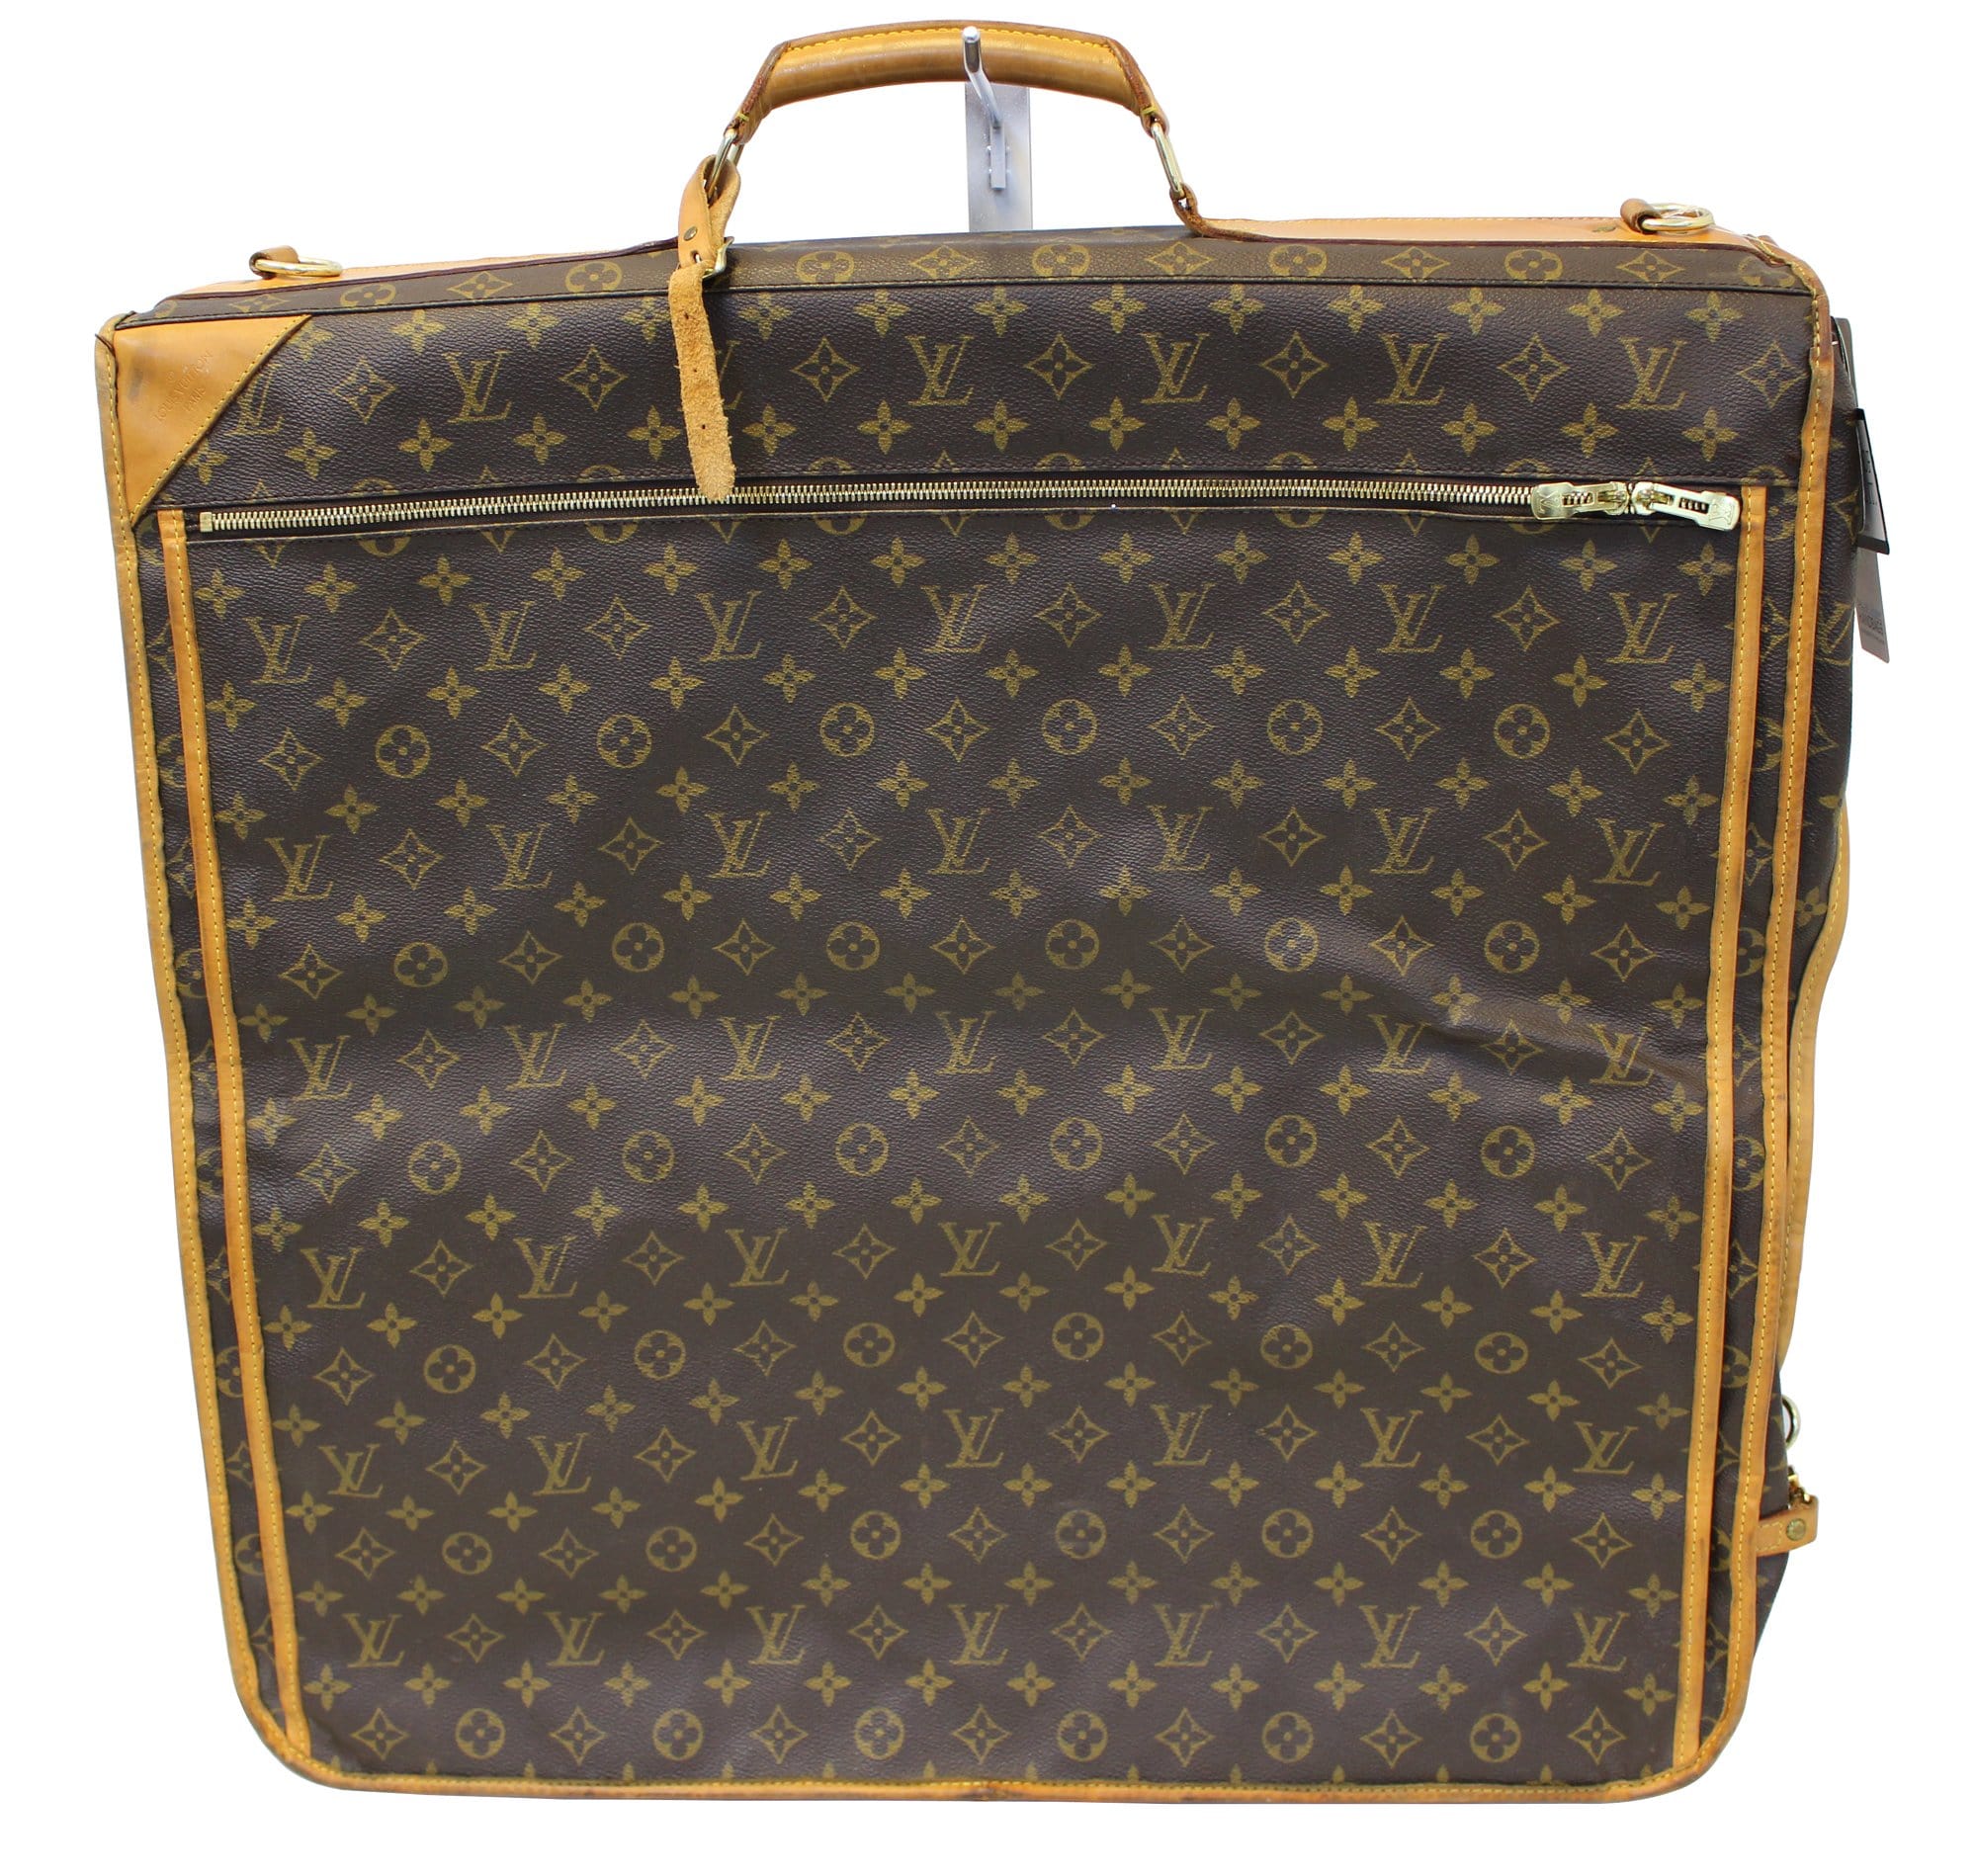 ARMADIO - LOUIS VUITTON Monogram Carry All Travel Bag 46 690 Kč